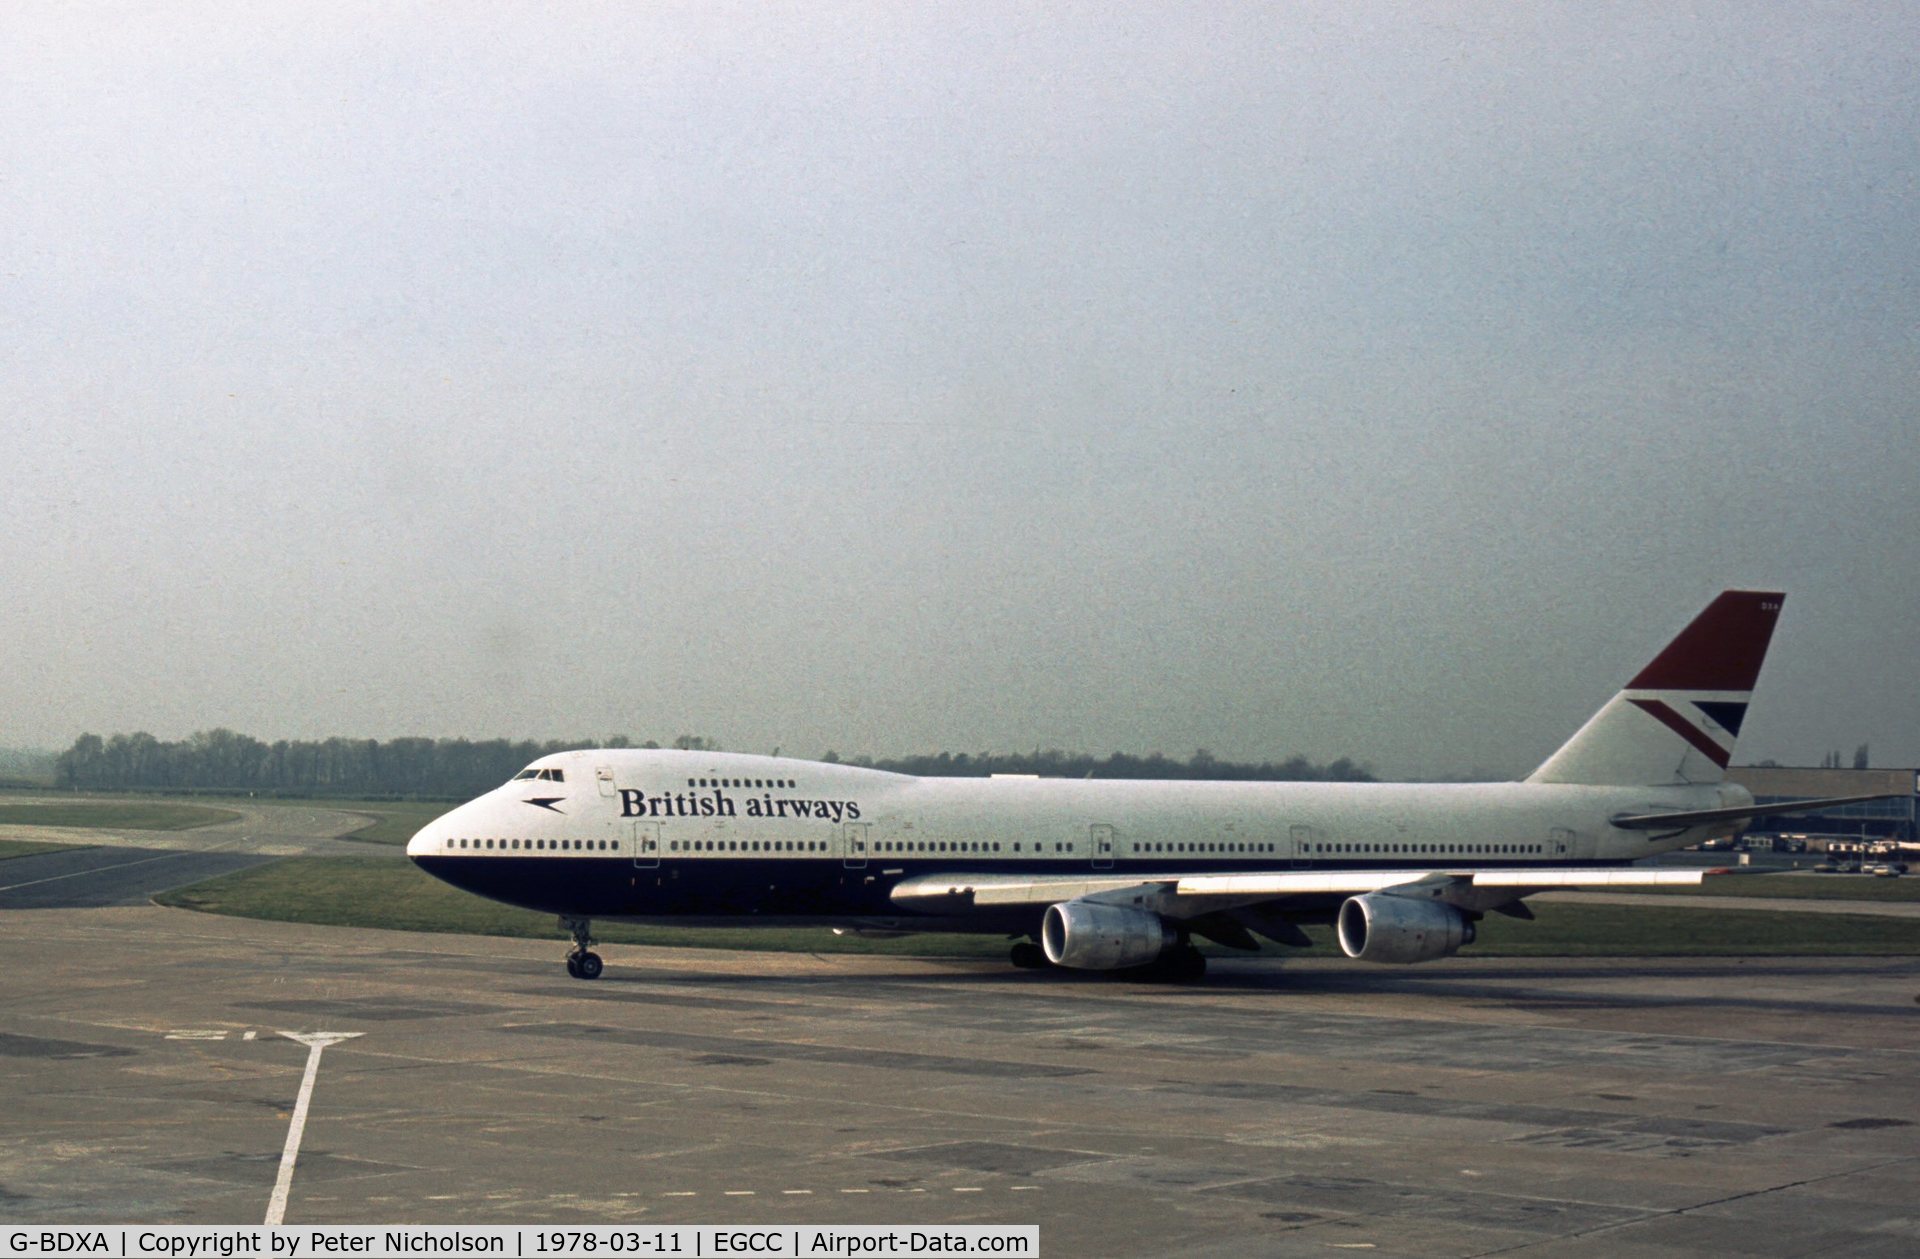 G-BDXA, 1977 Boeing 747-236B C/N 21238, British Airways flight departing Manchester in the Spring of 1978.